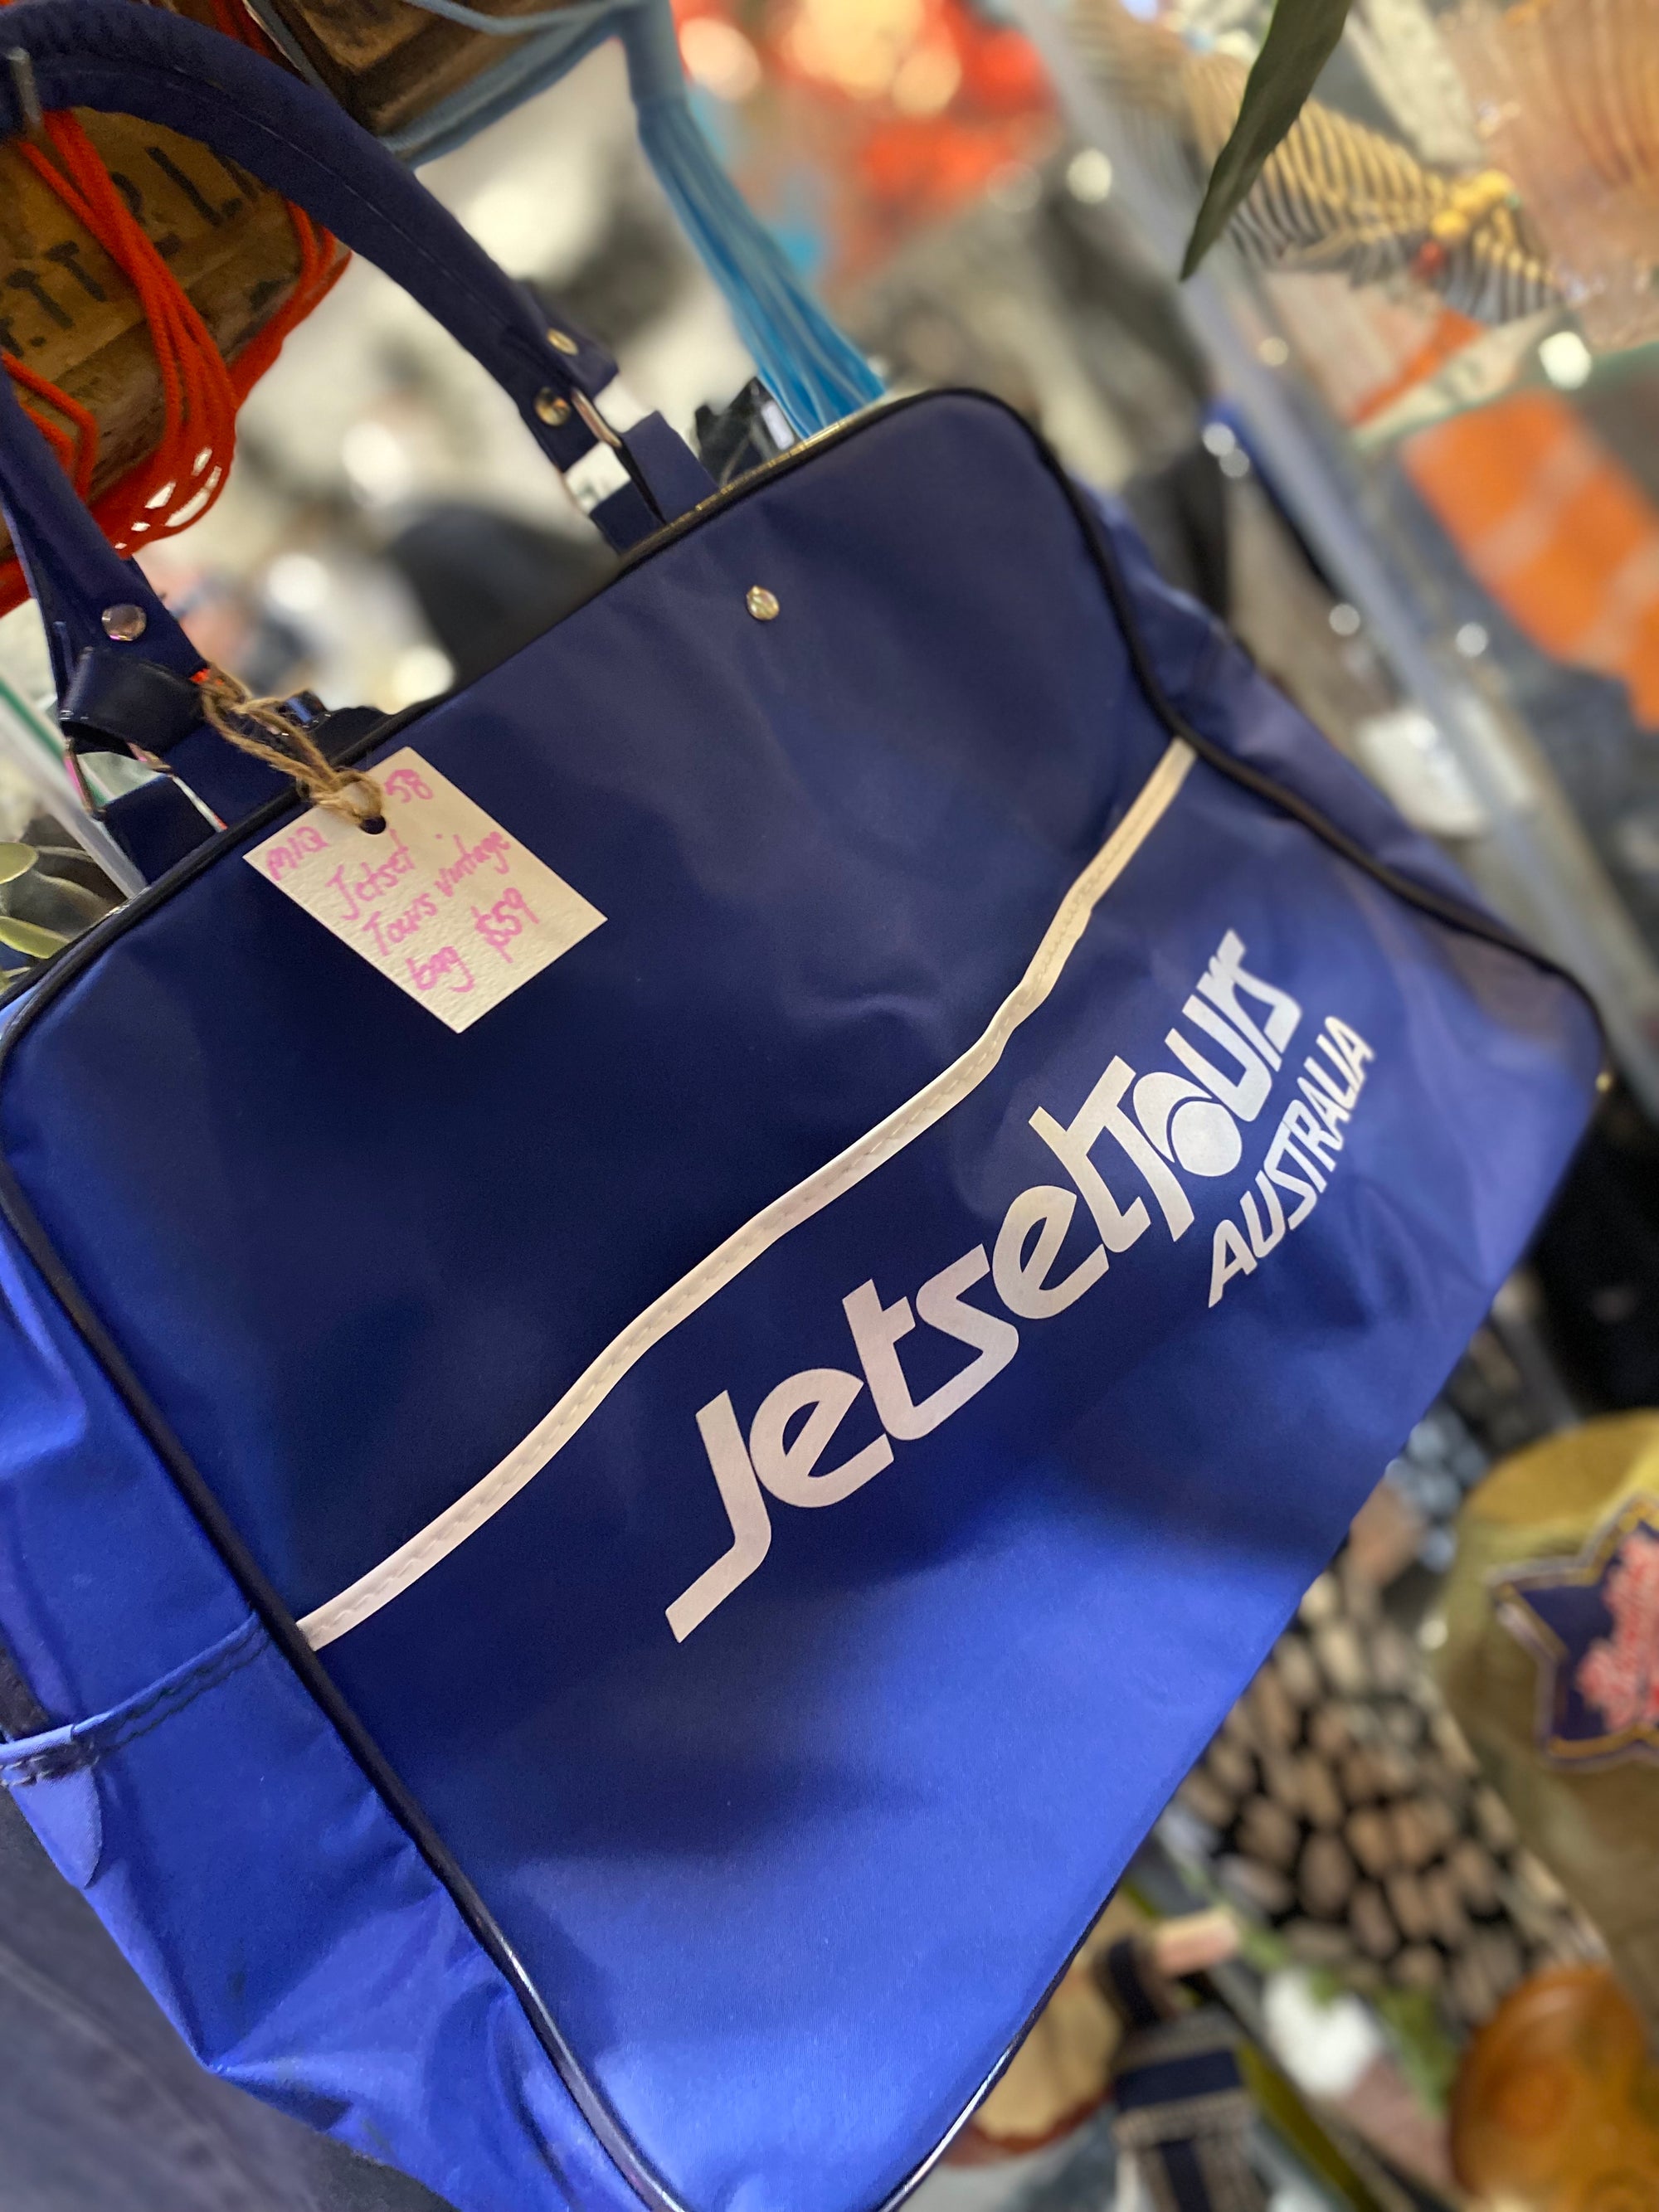 Retro Jetset Tours Australia Travel Bag